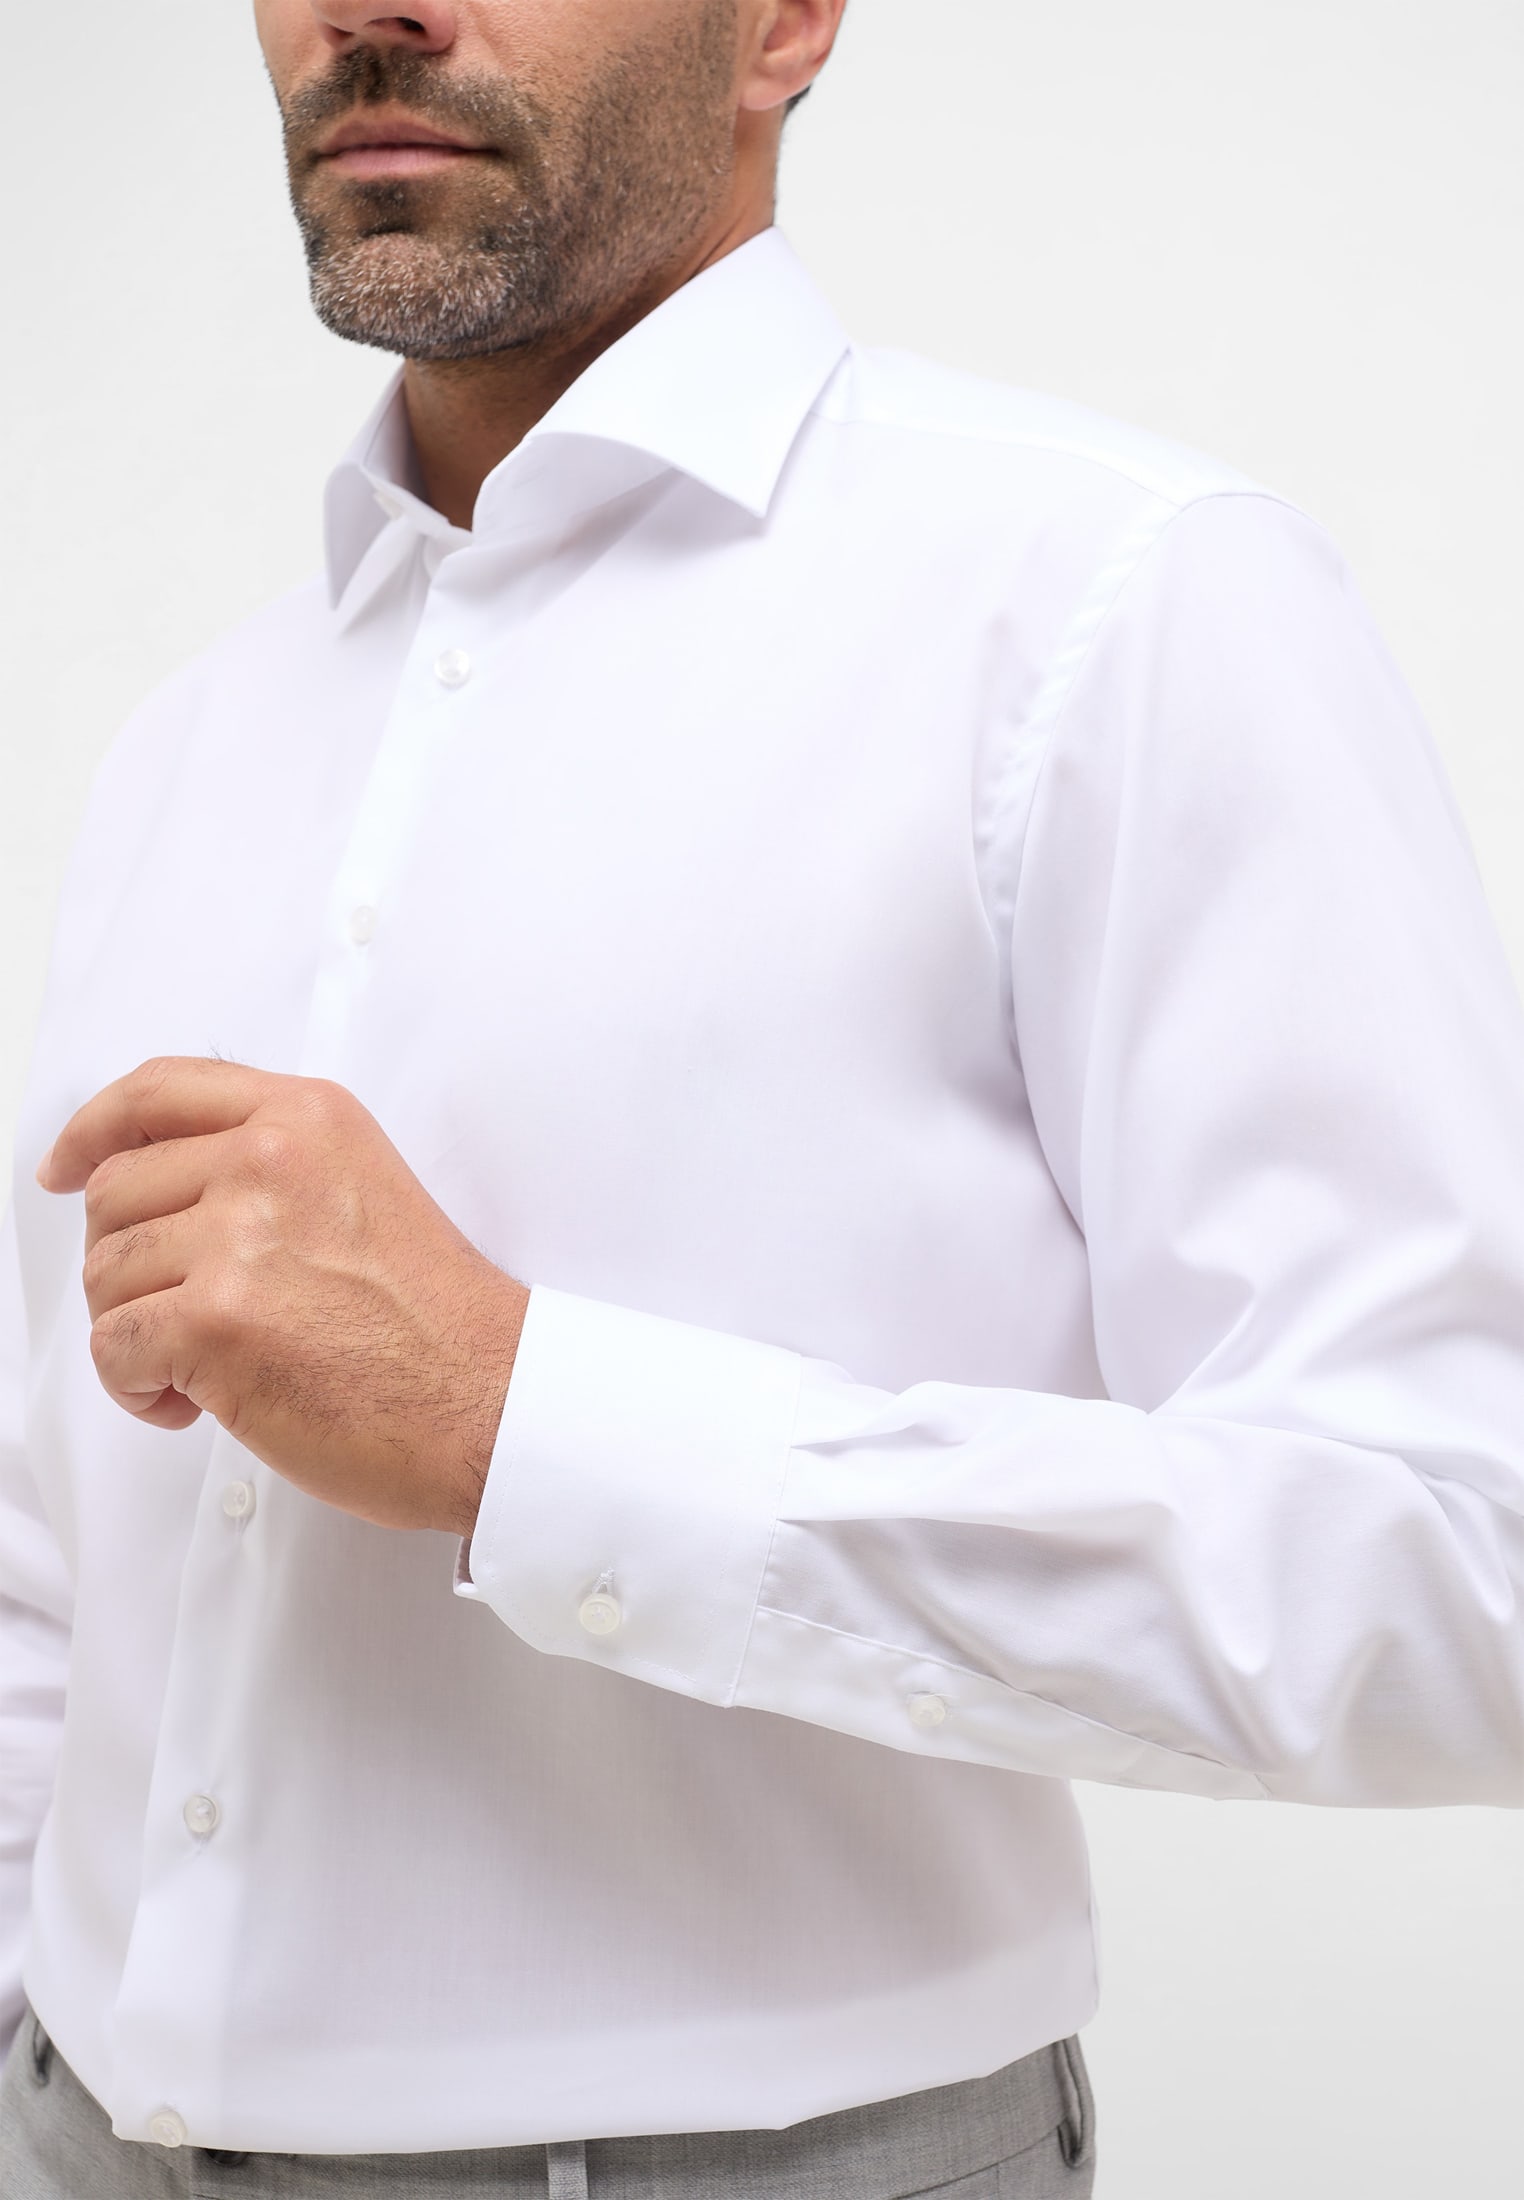 weiß | 1SH12605-00-01-40-1/1 FIT unifarben 40 | weiß | Langarm Shirt Original COMFORT | in